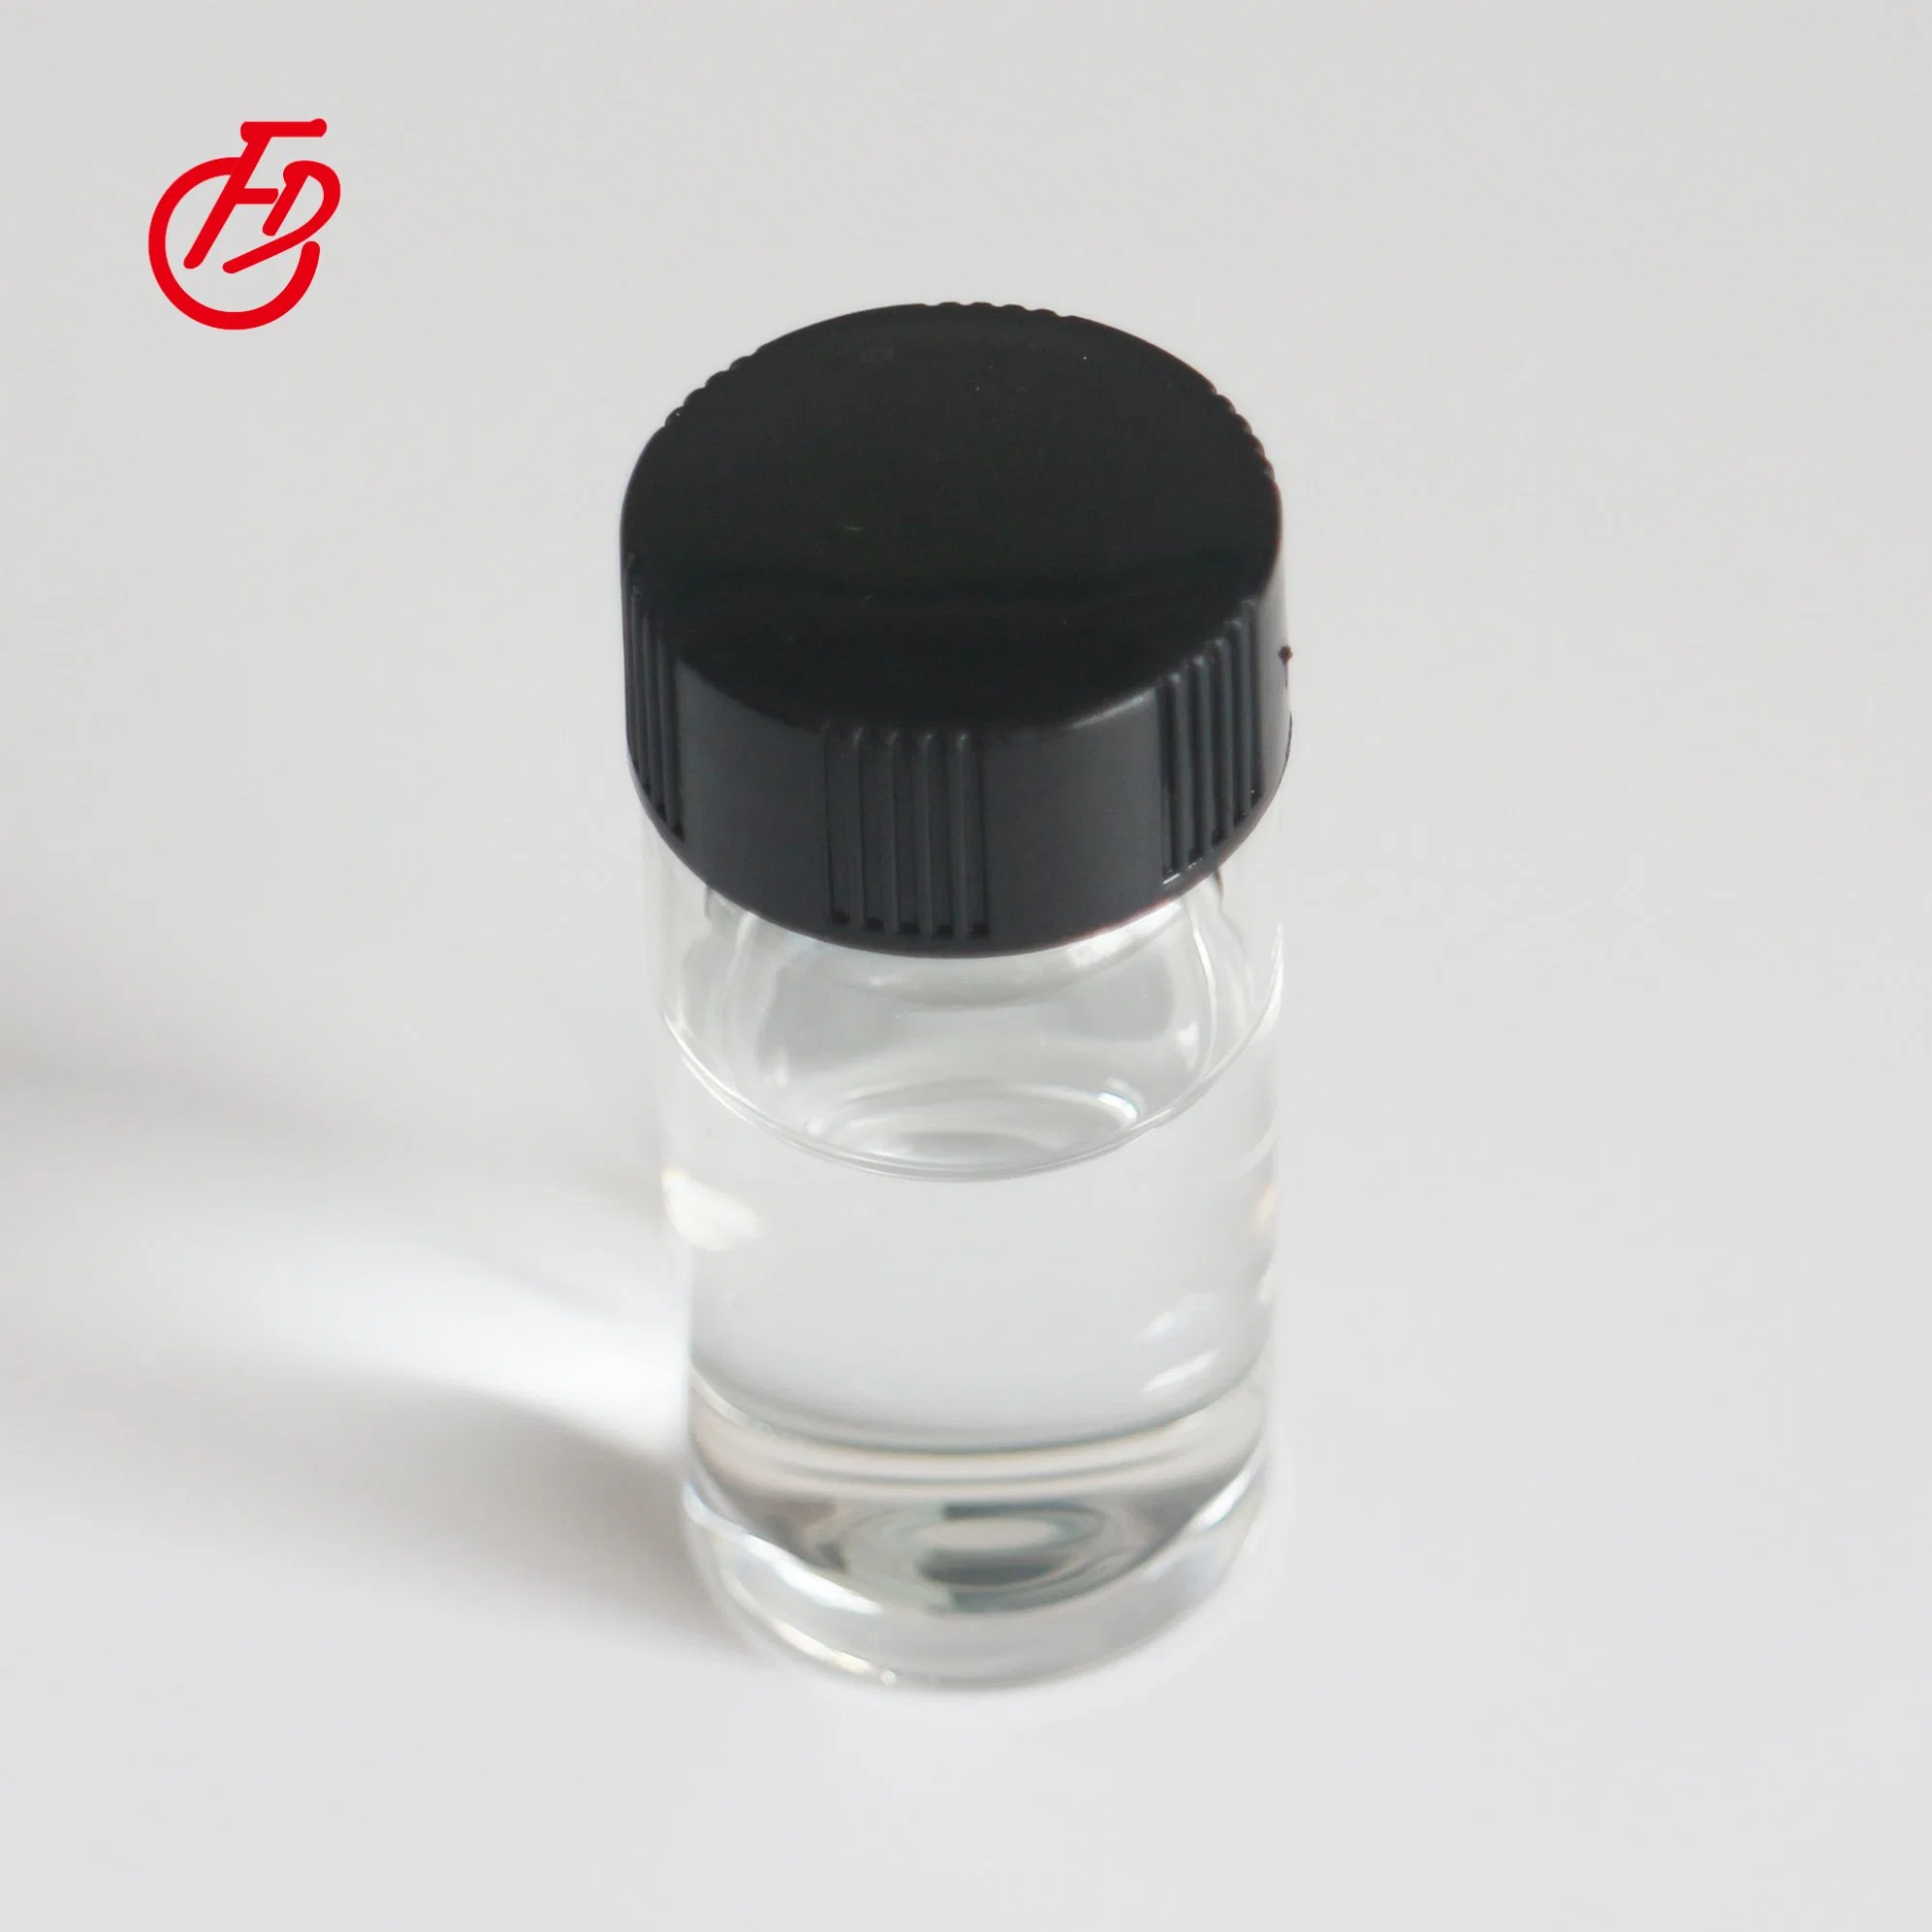 N, N-Dimethyl-1, 3-Propandiamin 99,5% Min C5h14n2 Mudanjiang Fengda Factory Supply 109-55-7 DMAPA